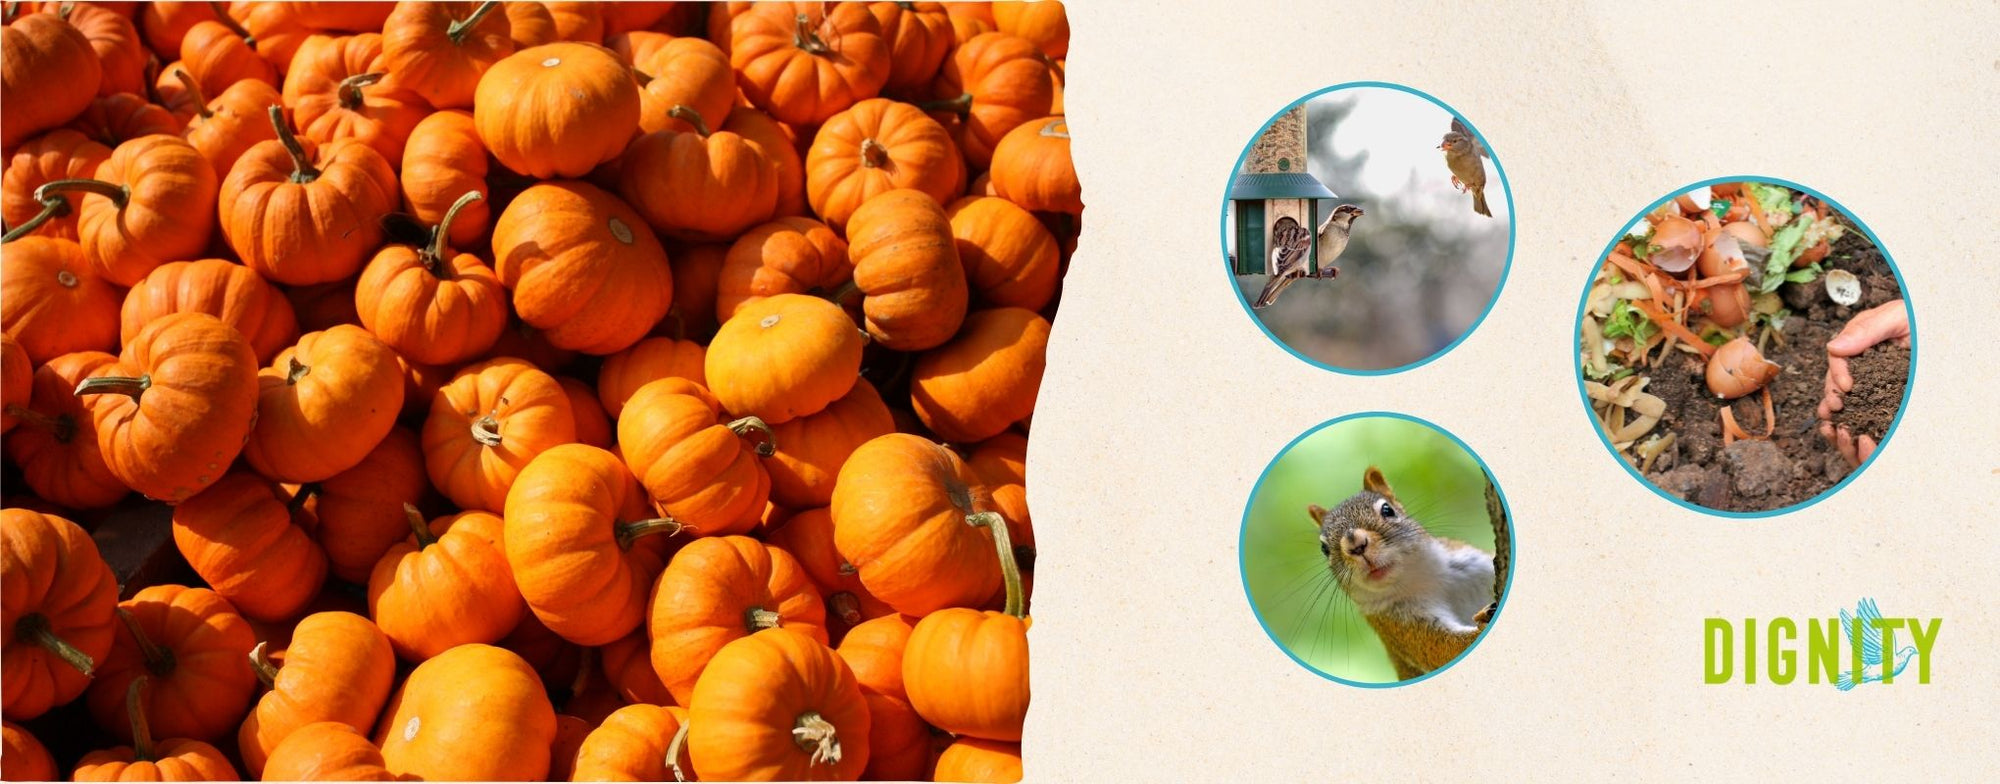 Productive Ways of Disposing Pumpkins After Halloween